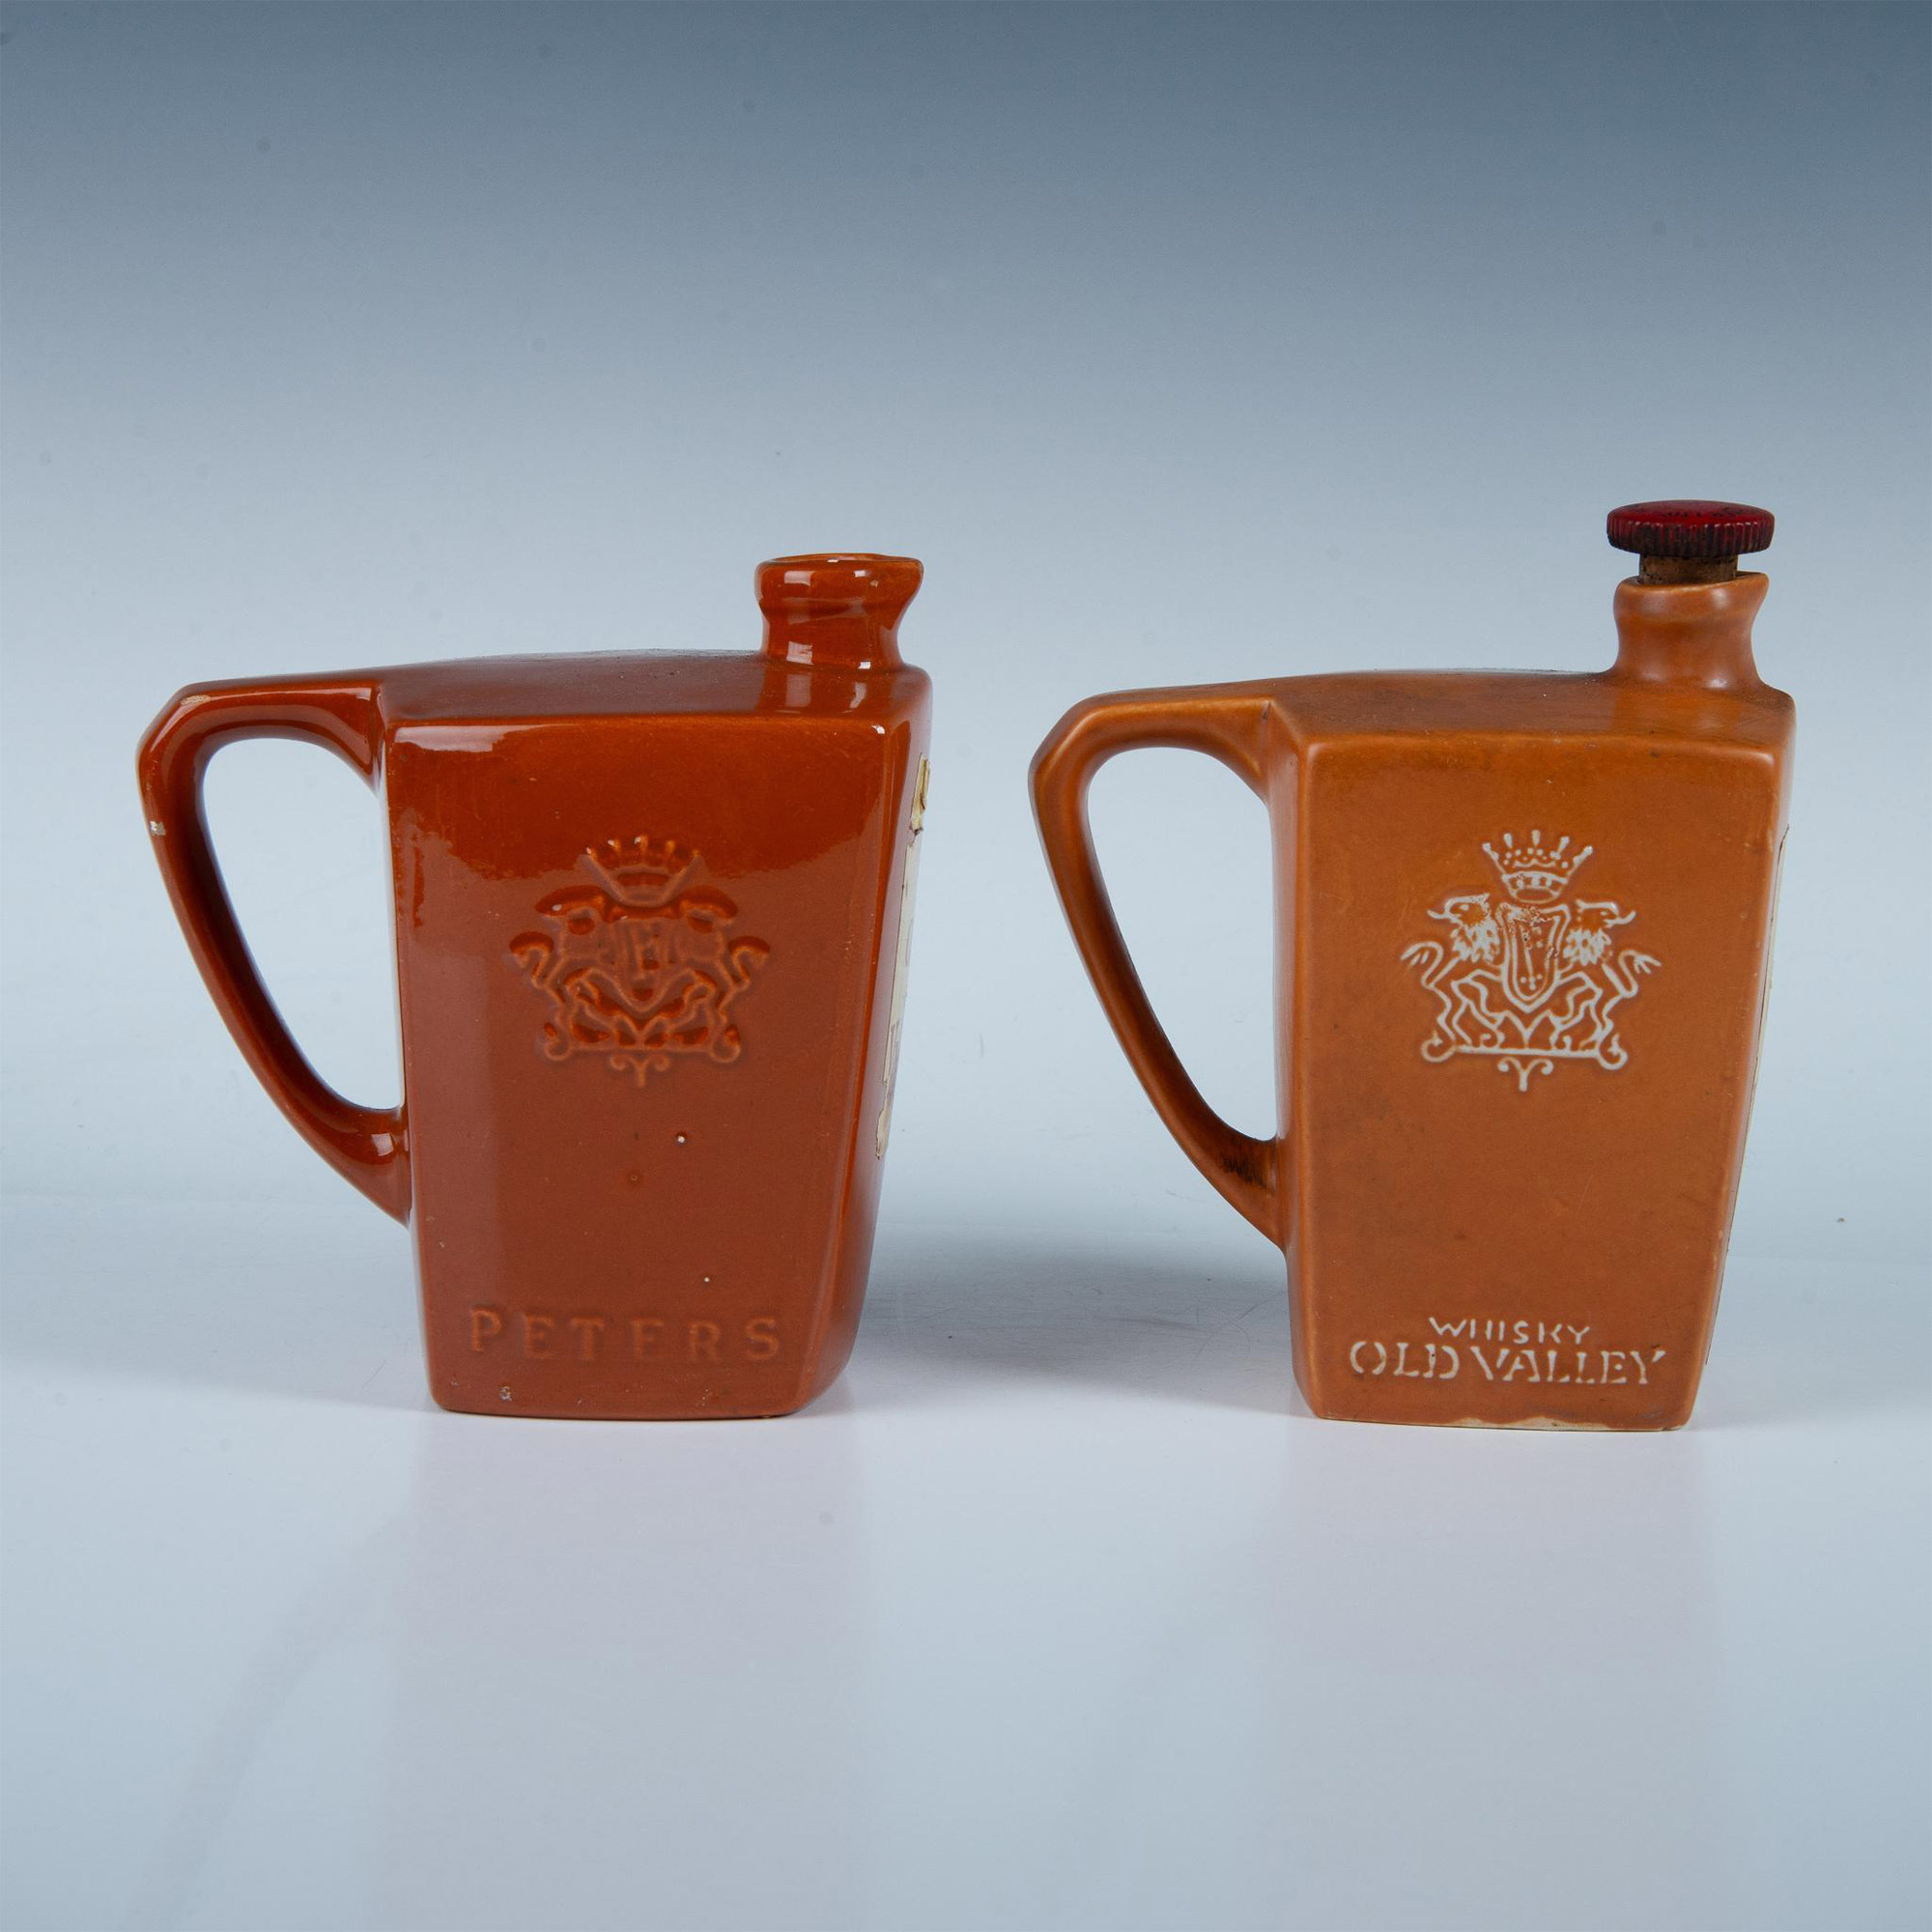 2pc Vintage Ceramic Peter's Old Valley Whisky Bottles - Image 4 of 6